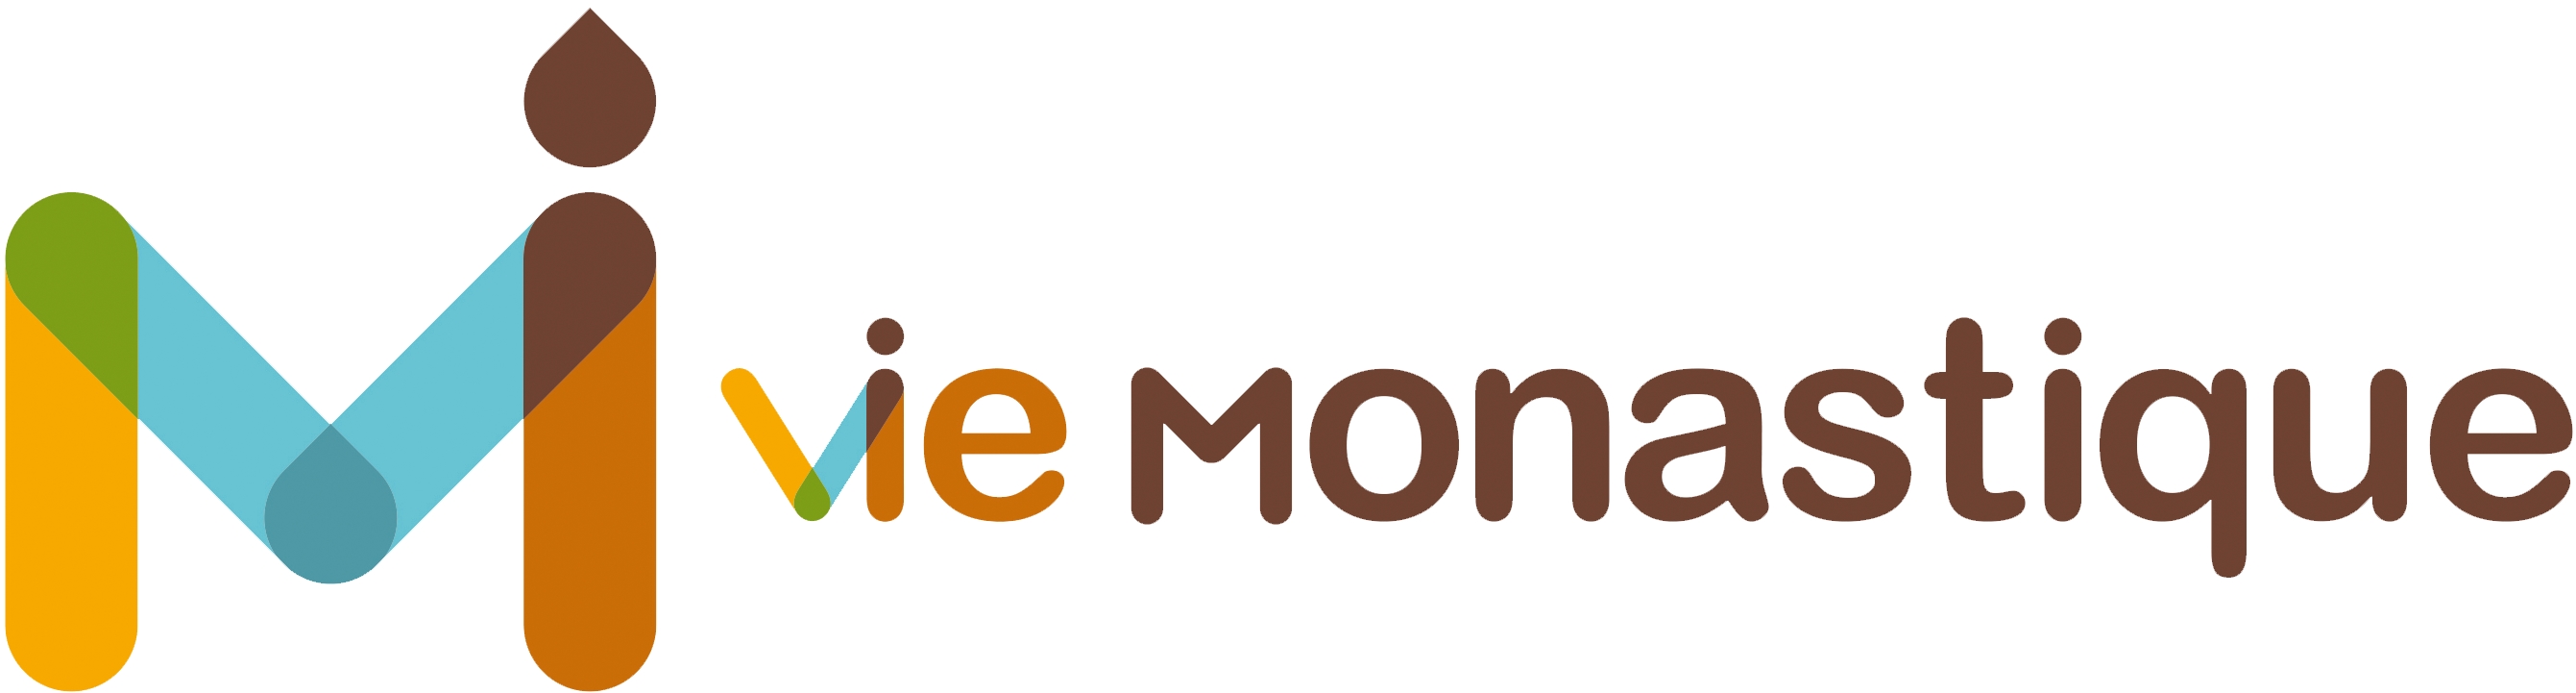 logo vie-monastique